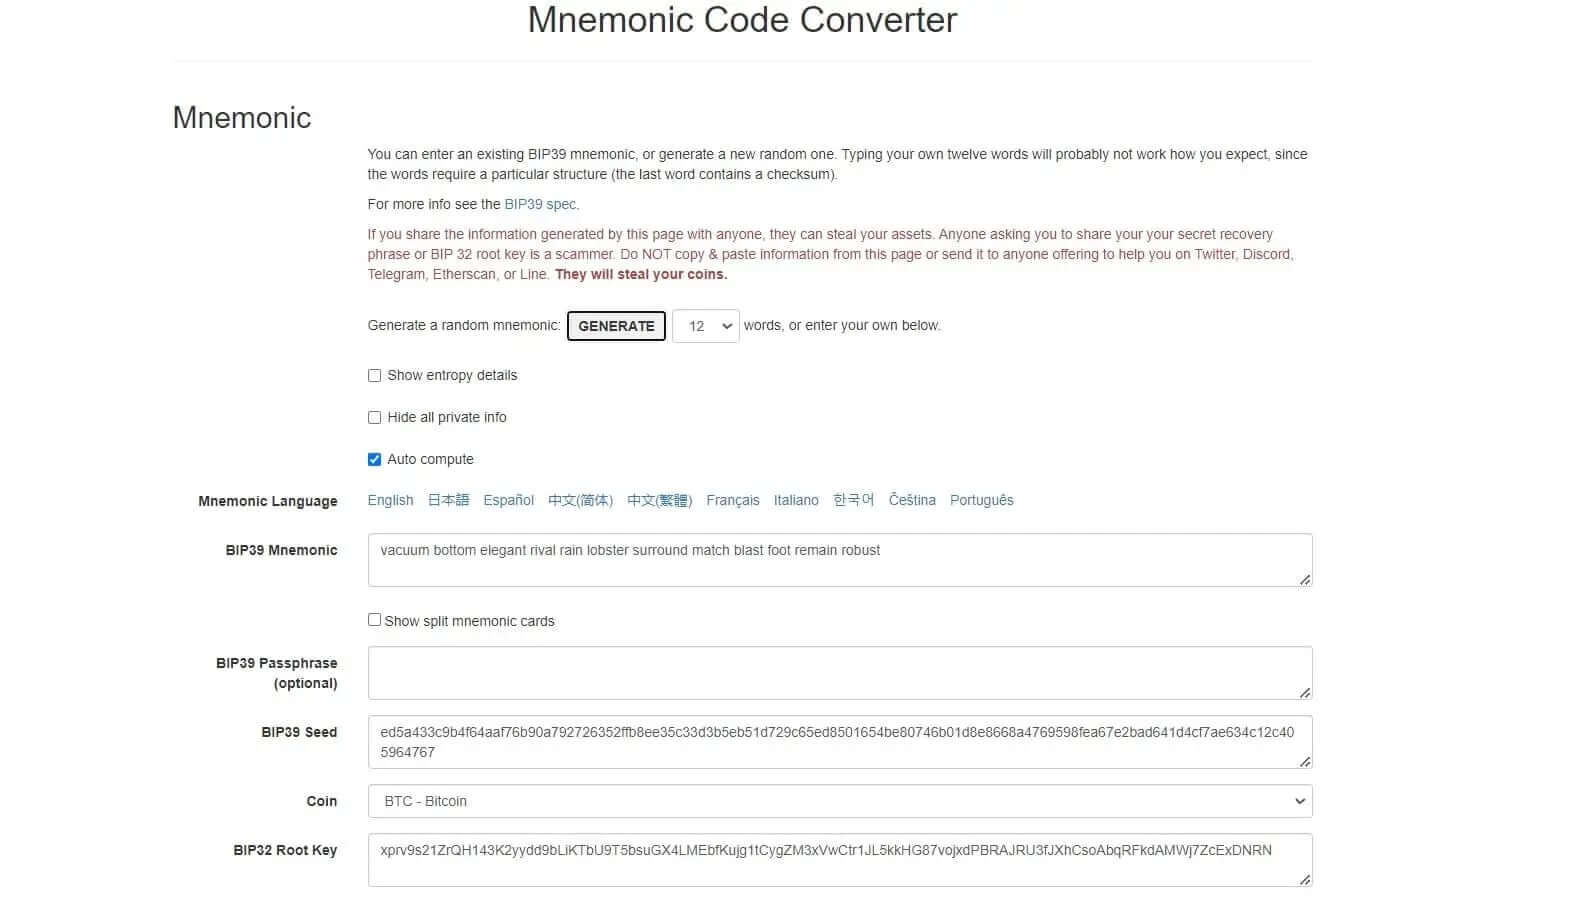 Mnemonic Code Converter